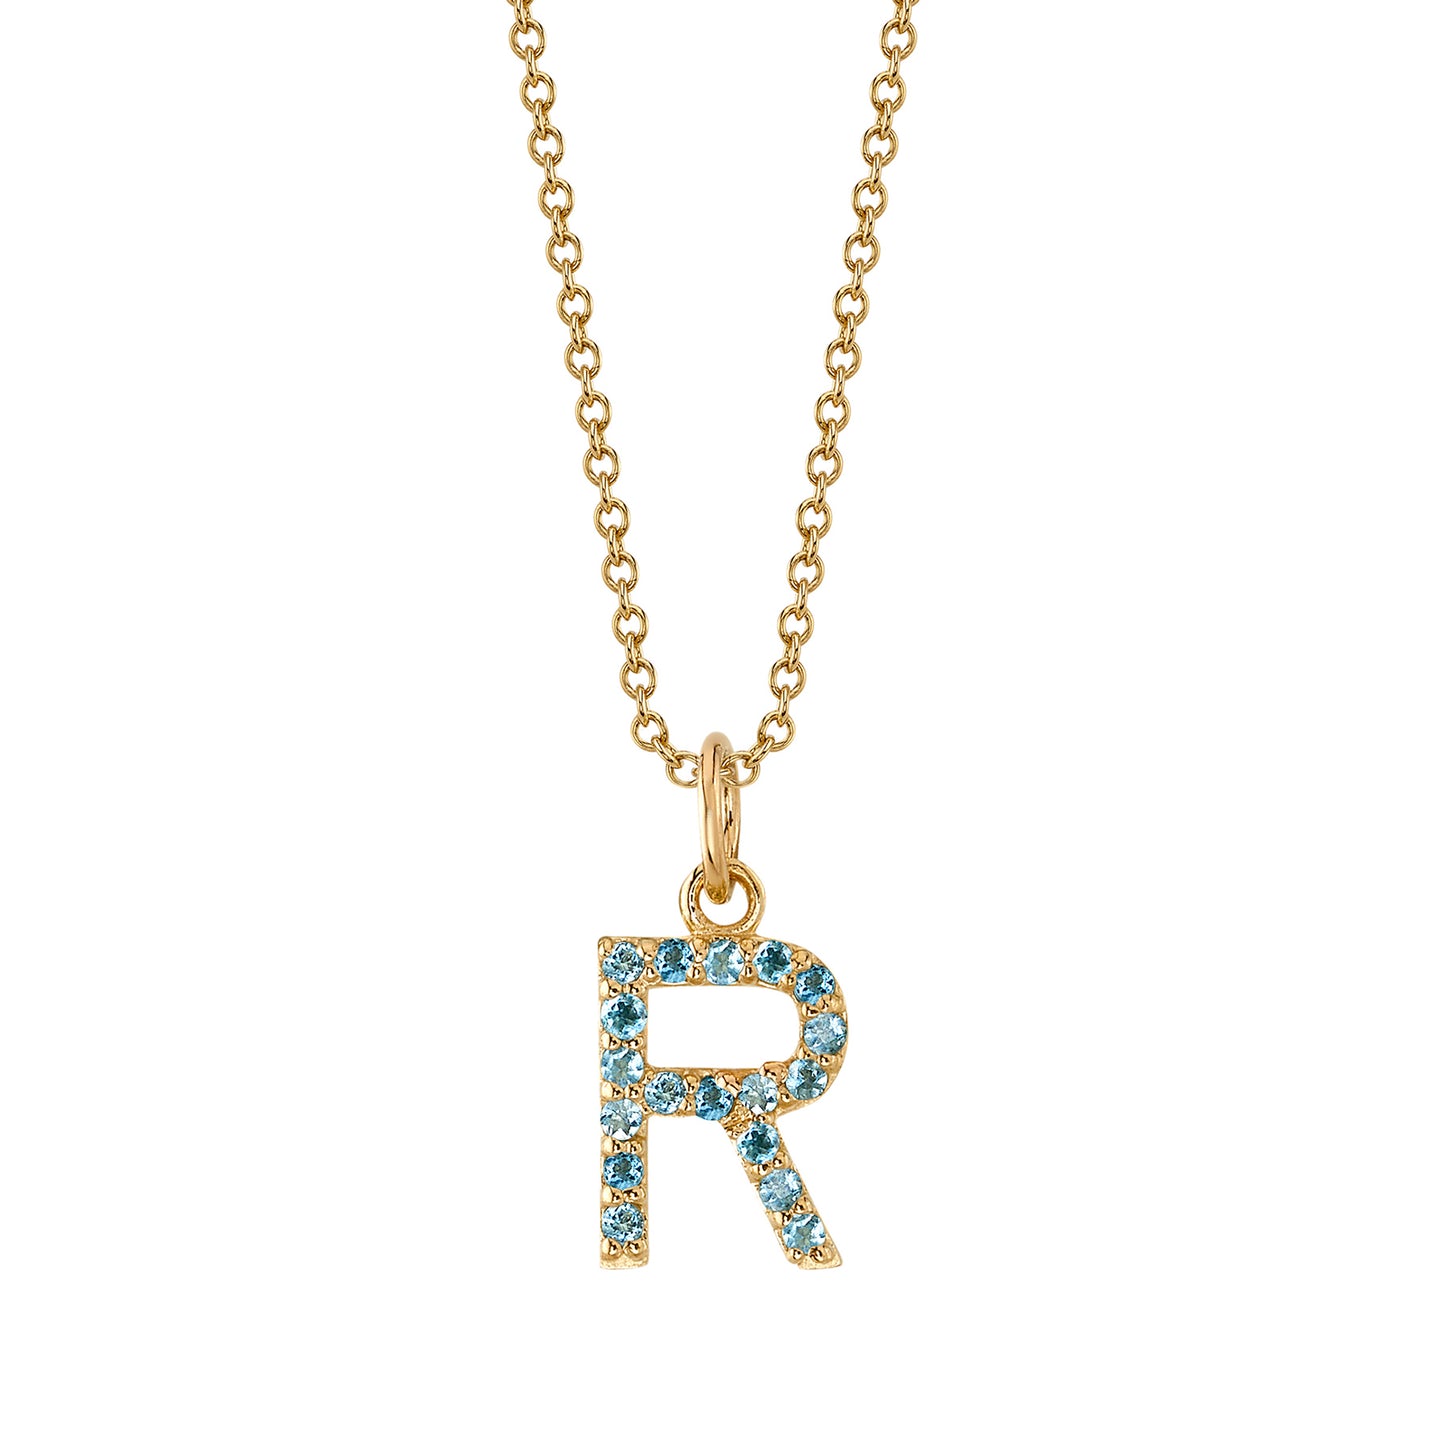 R Initial Birthstone Charm Necklace